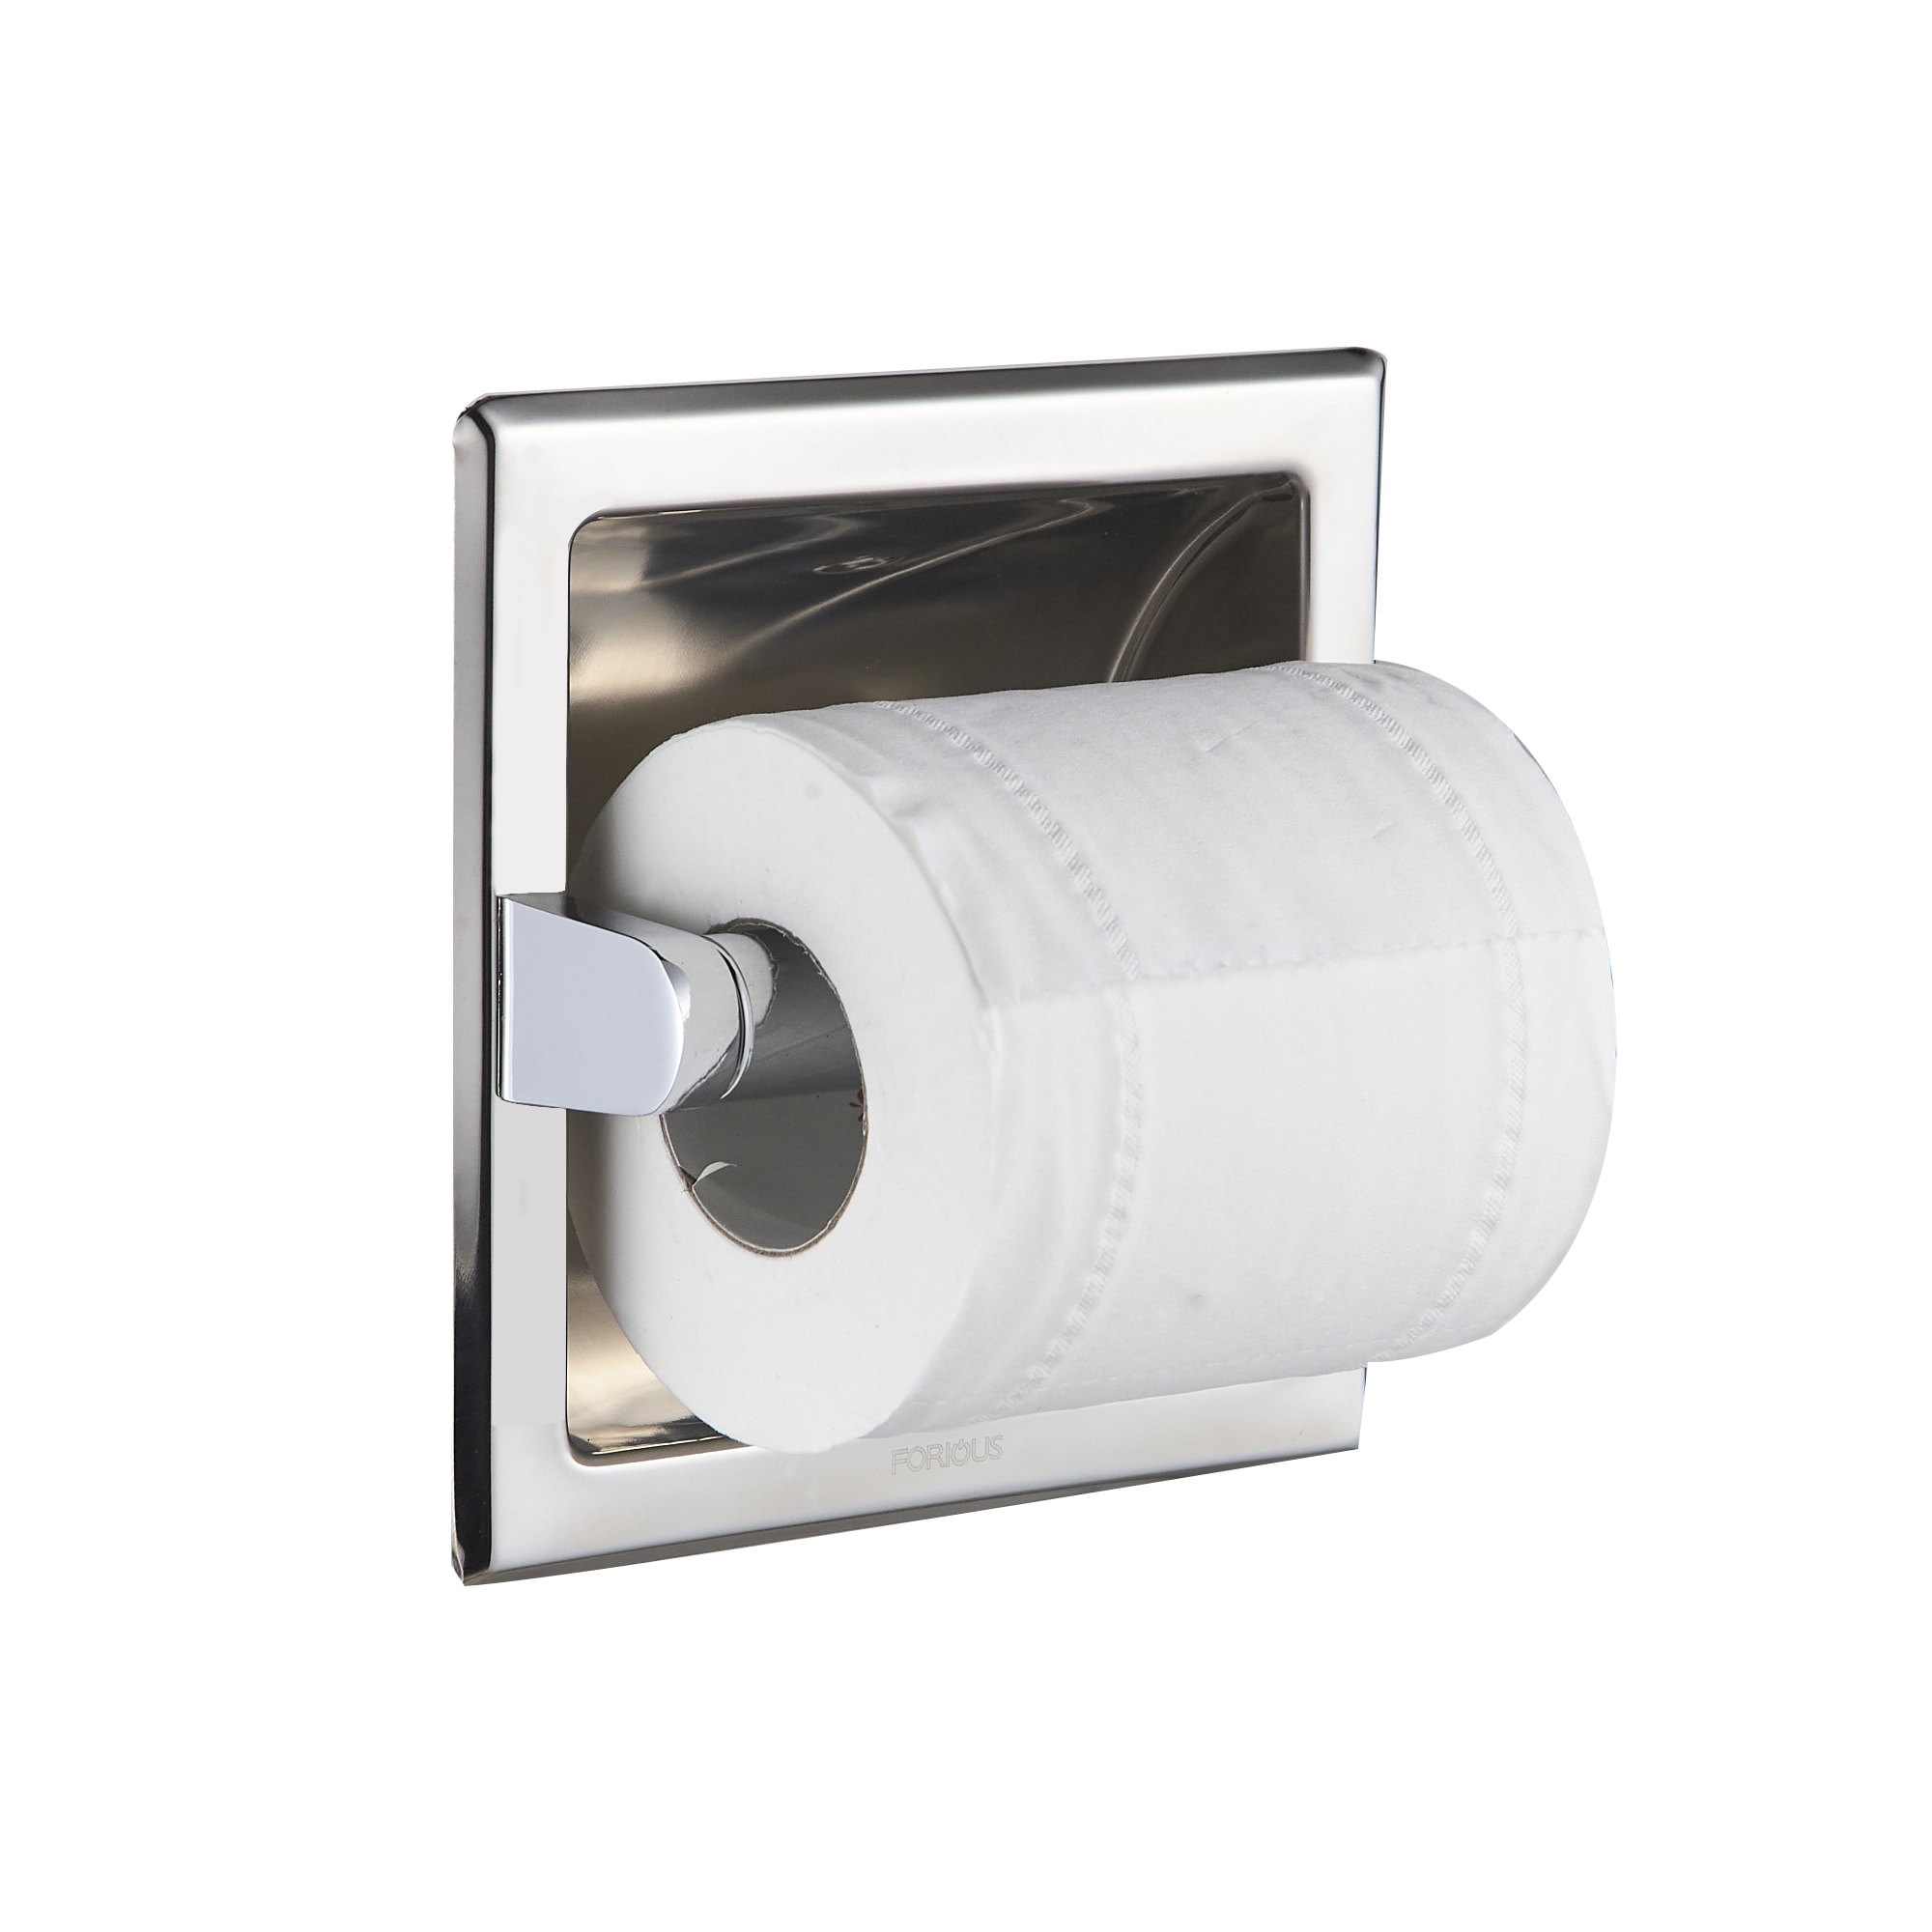 ARISTA Brushed Nickel Recessed Spring-loaded Toilet Paper Holder